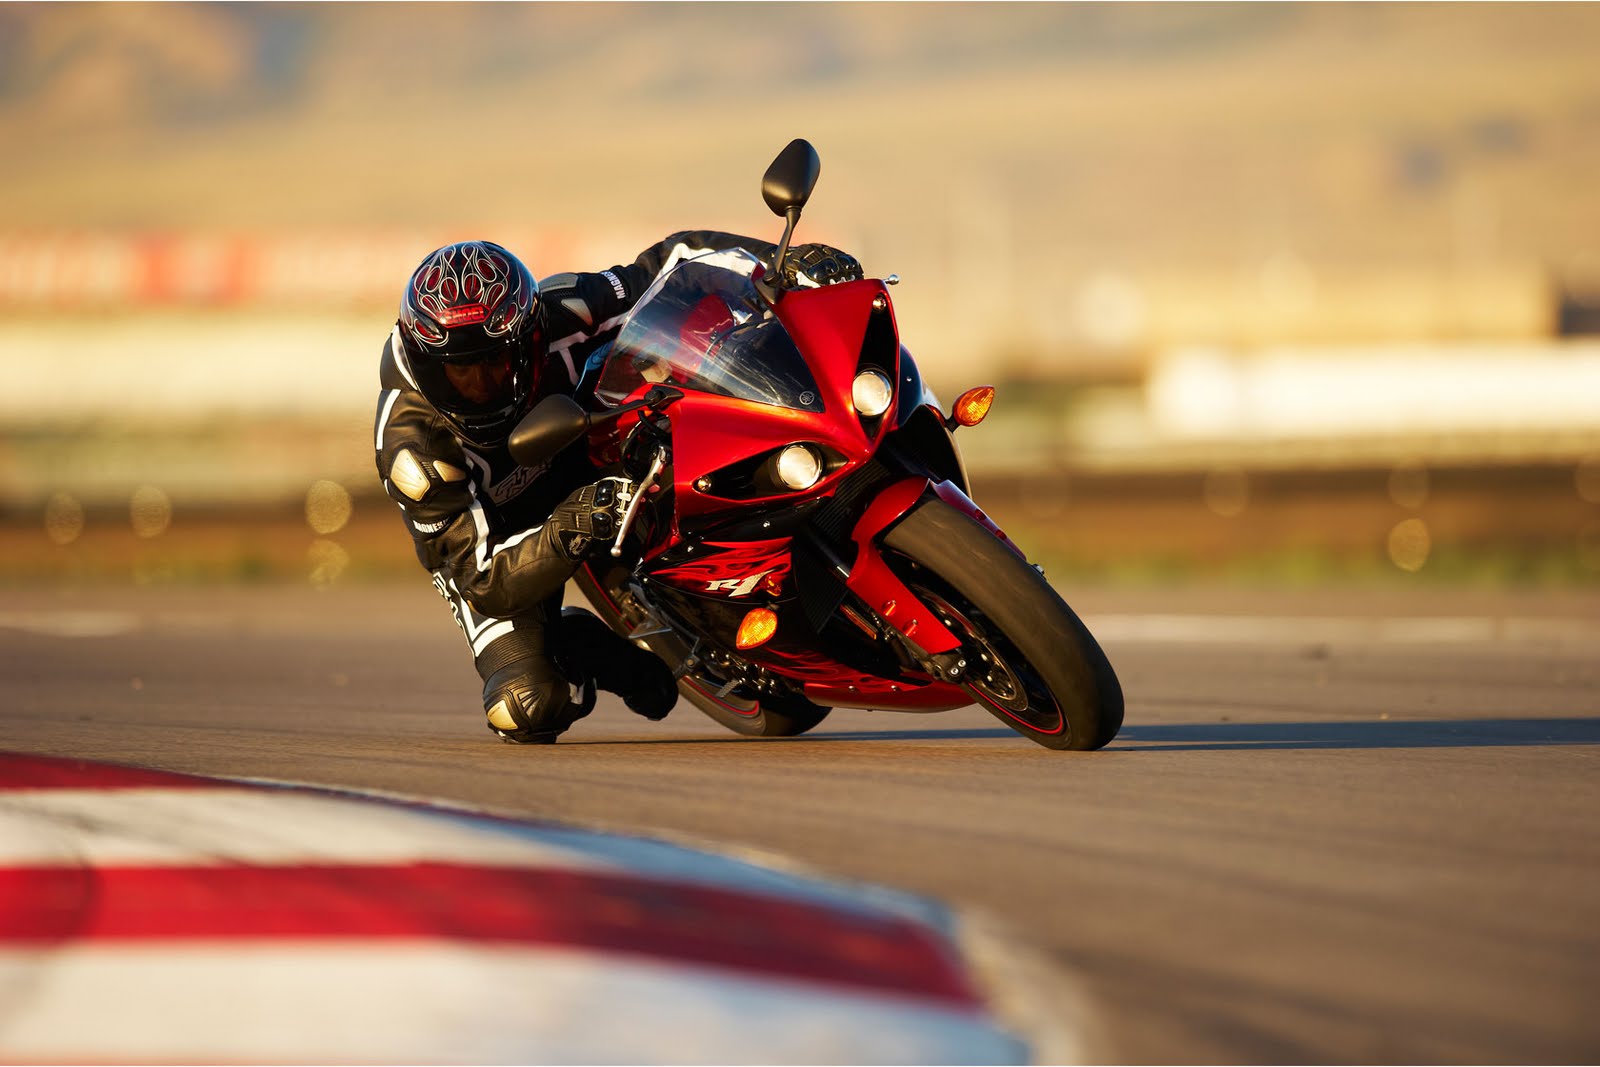 Yamaha Terbaru Yzf R1 Bikes And Motor Sport Picture Wallpaper